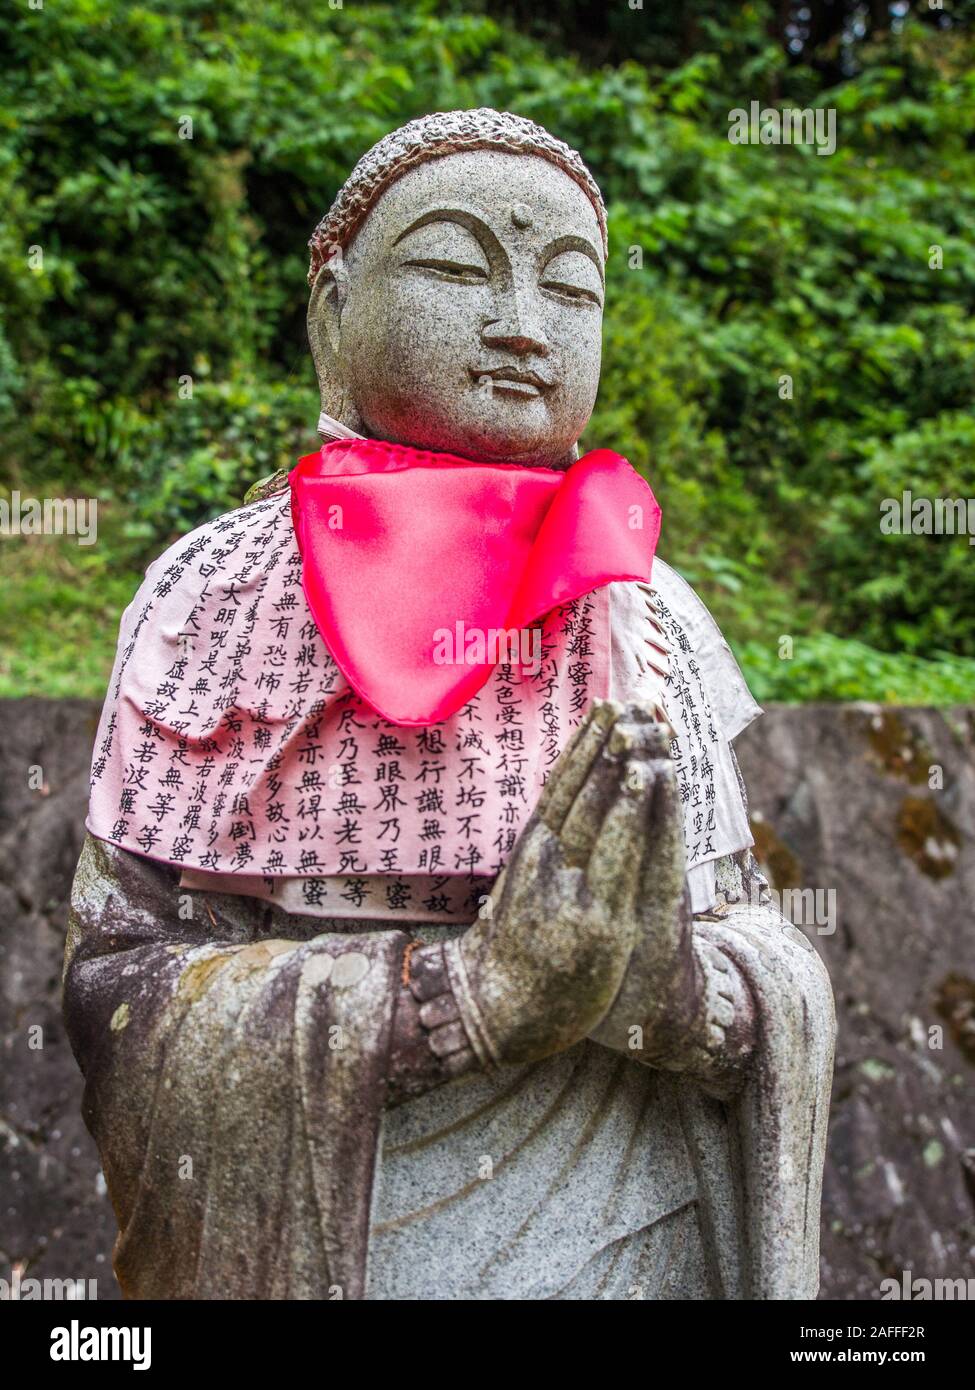 Buddhistische Statue, Mudra beten, mit roten Latz und Kanji sutra Schal, Butsumokuji Tempel 42 Shikoku 88 Tempel Wallfahrt, Ehime Shikoku Japan, Stockfoto